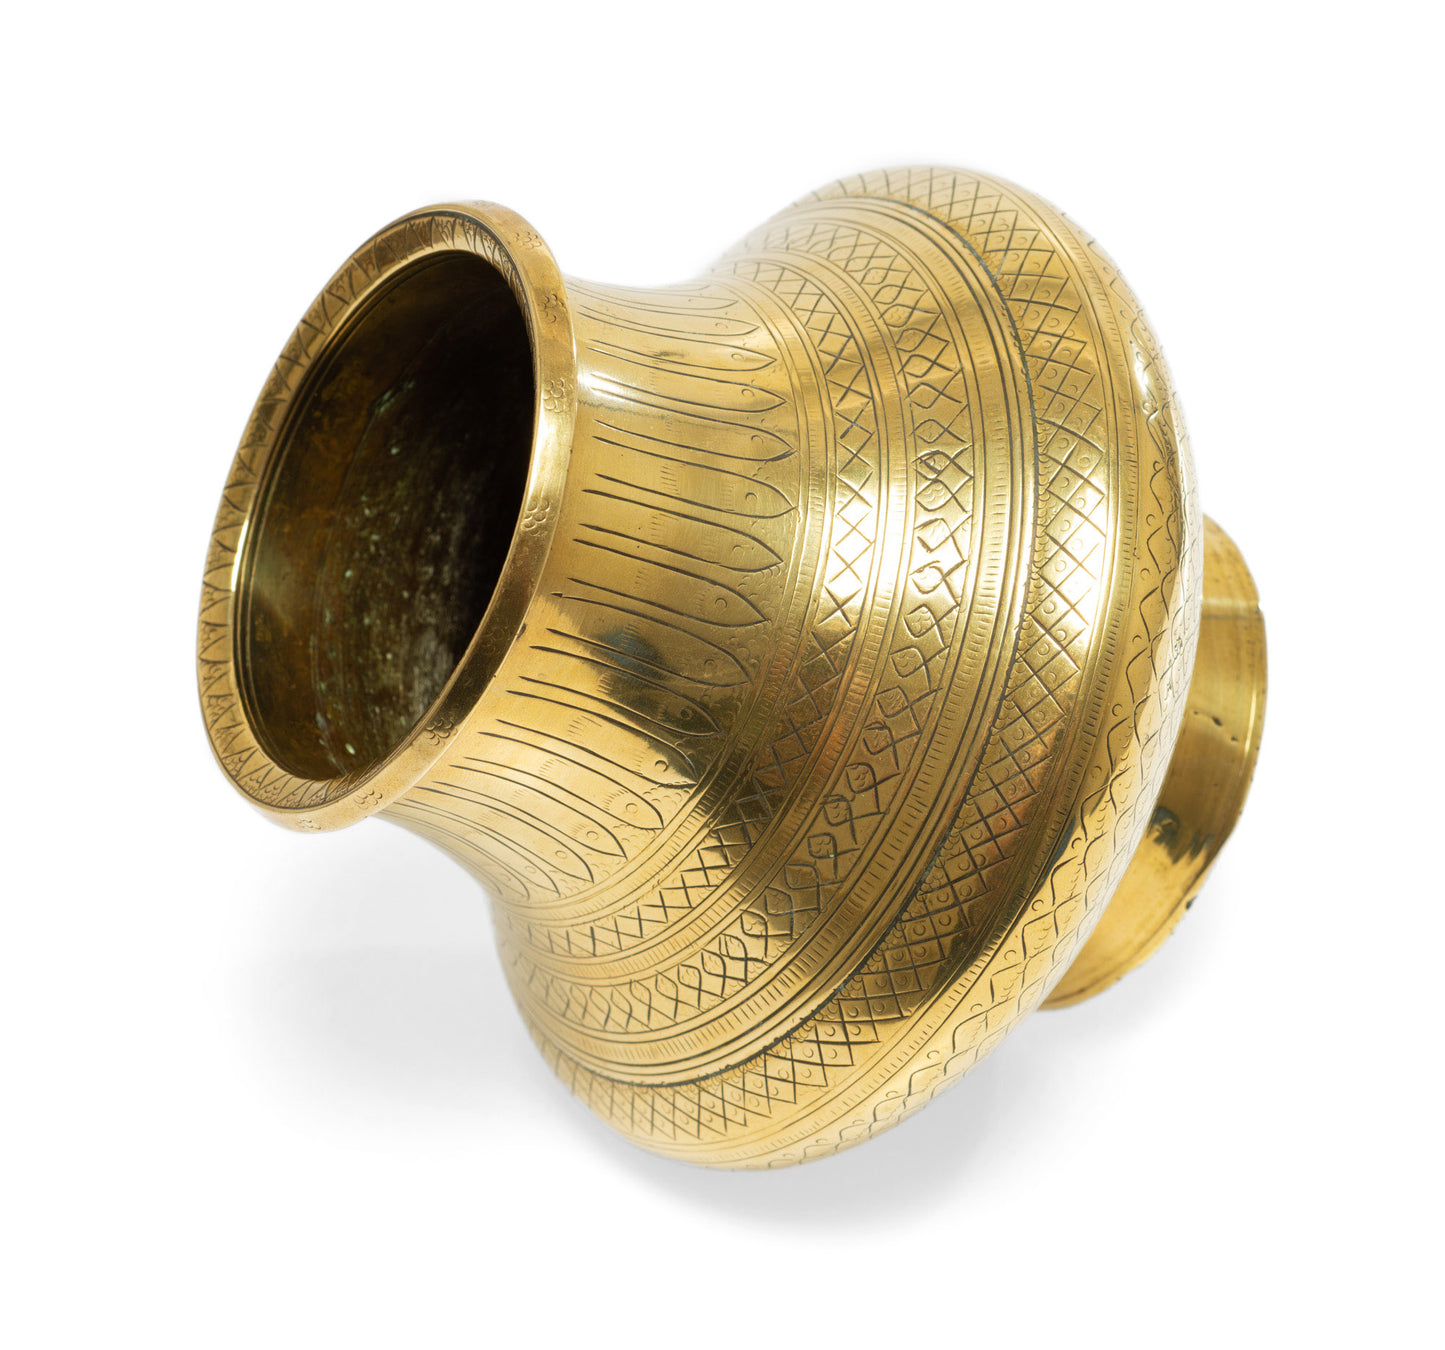 Antique Indian Islamic Region Polished Bronze Lota Vase Water Vessel c1850 (Code 2651)